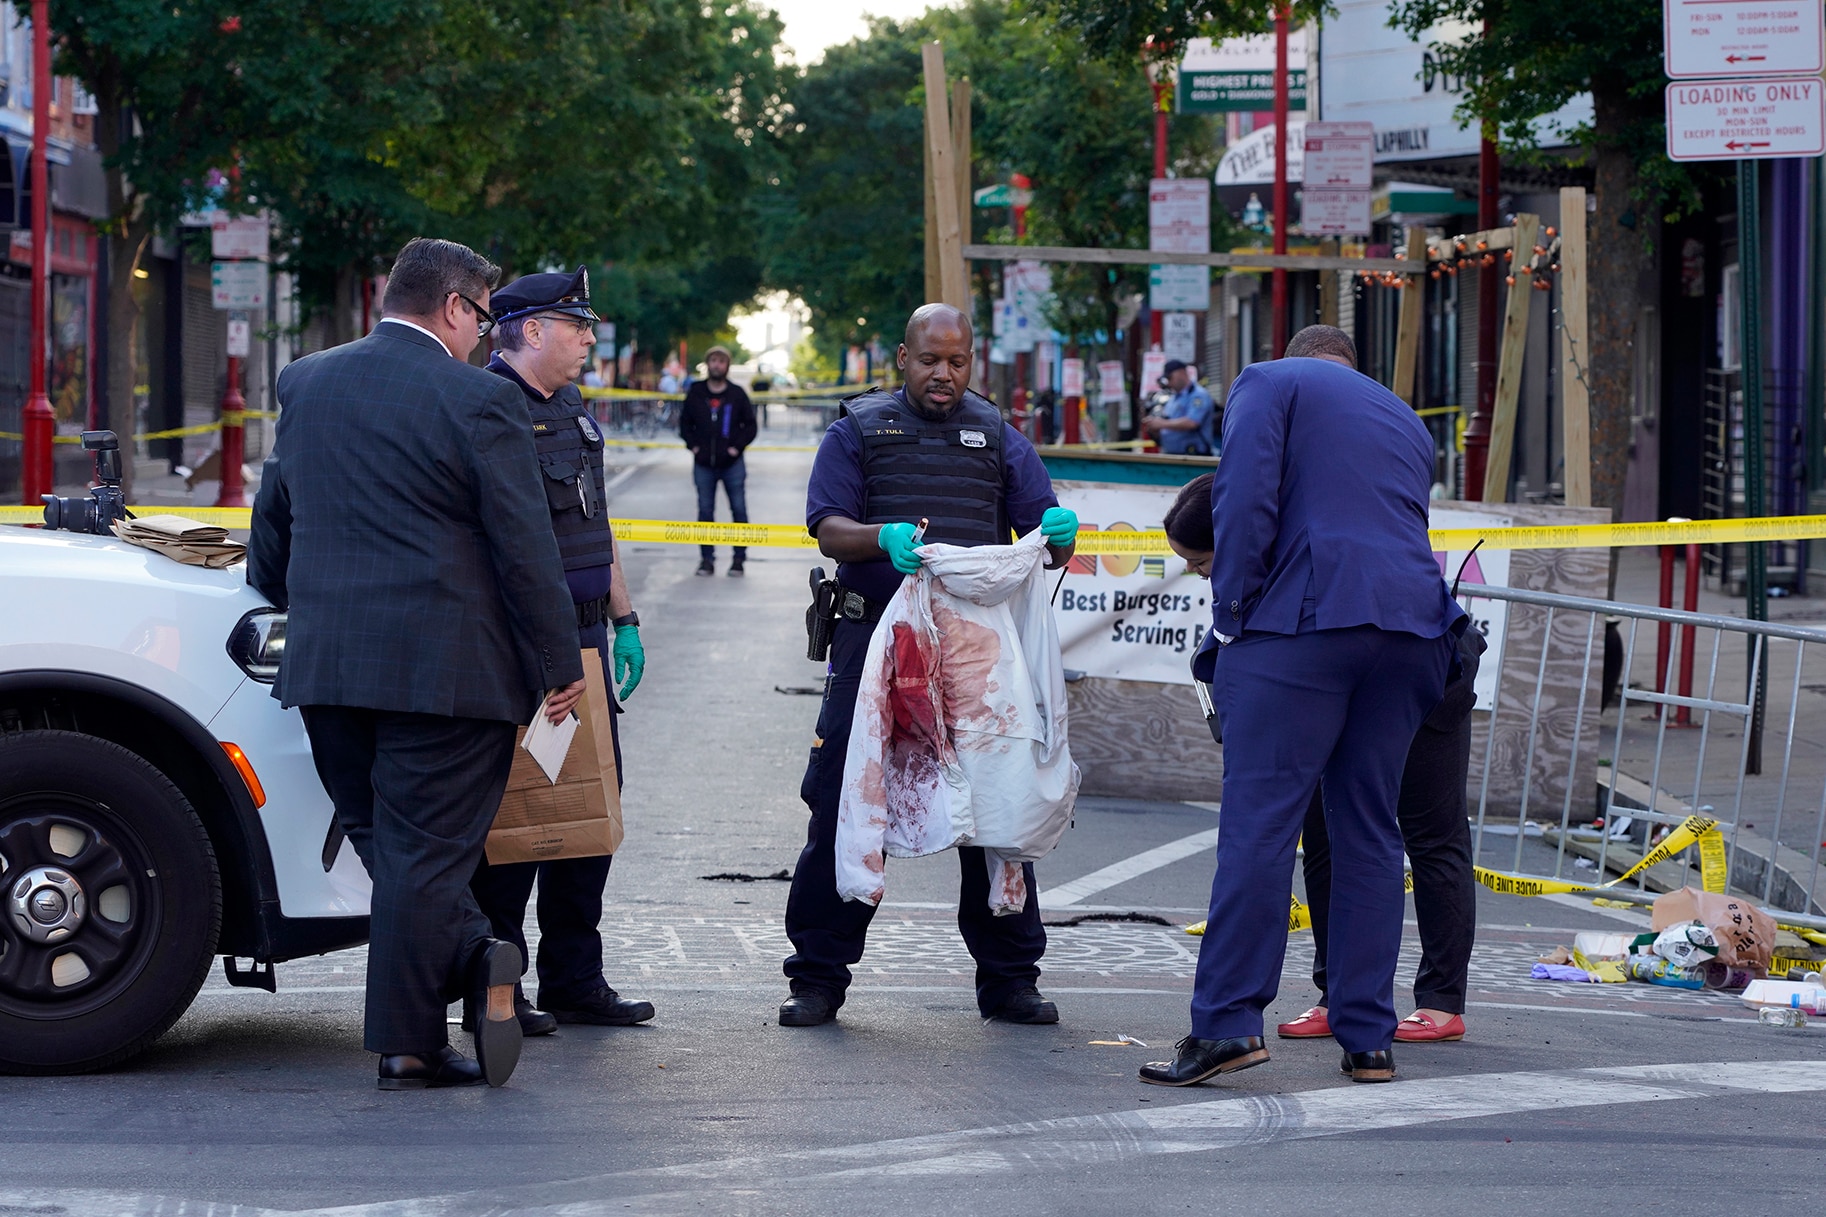 investigators on the scene of the shooting on South Street in Philadelphia